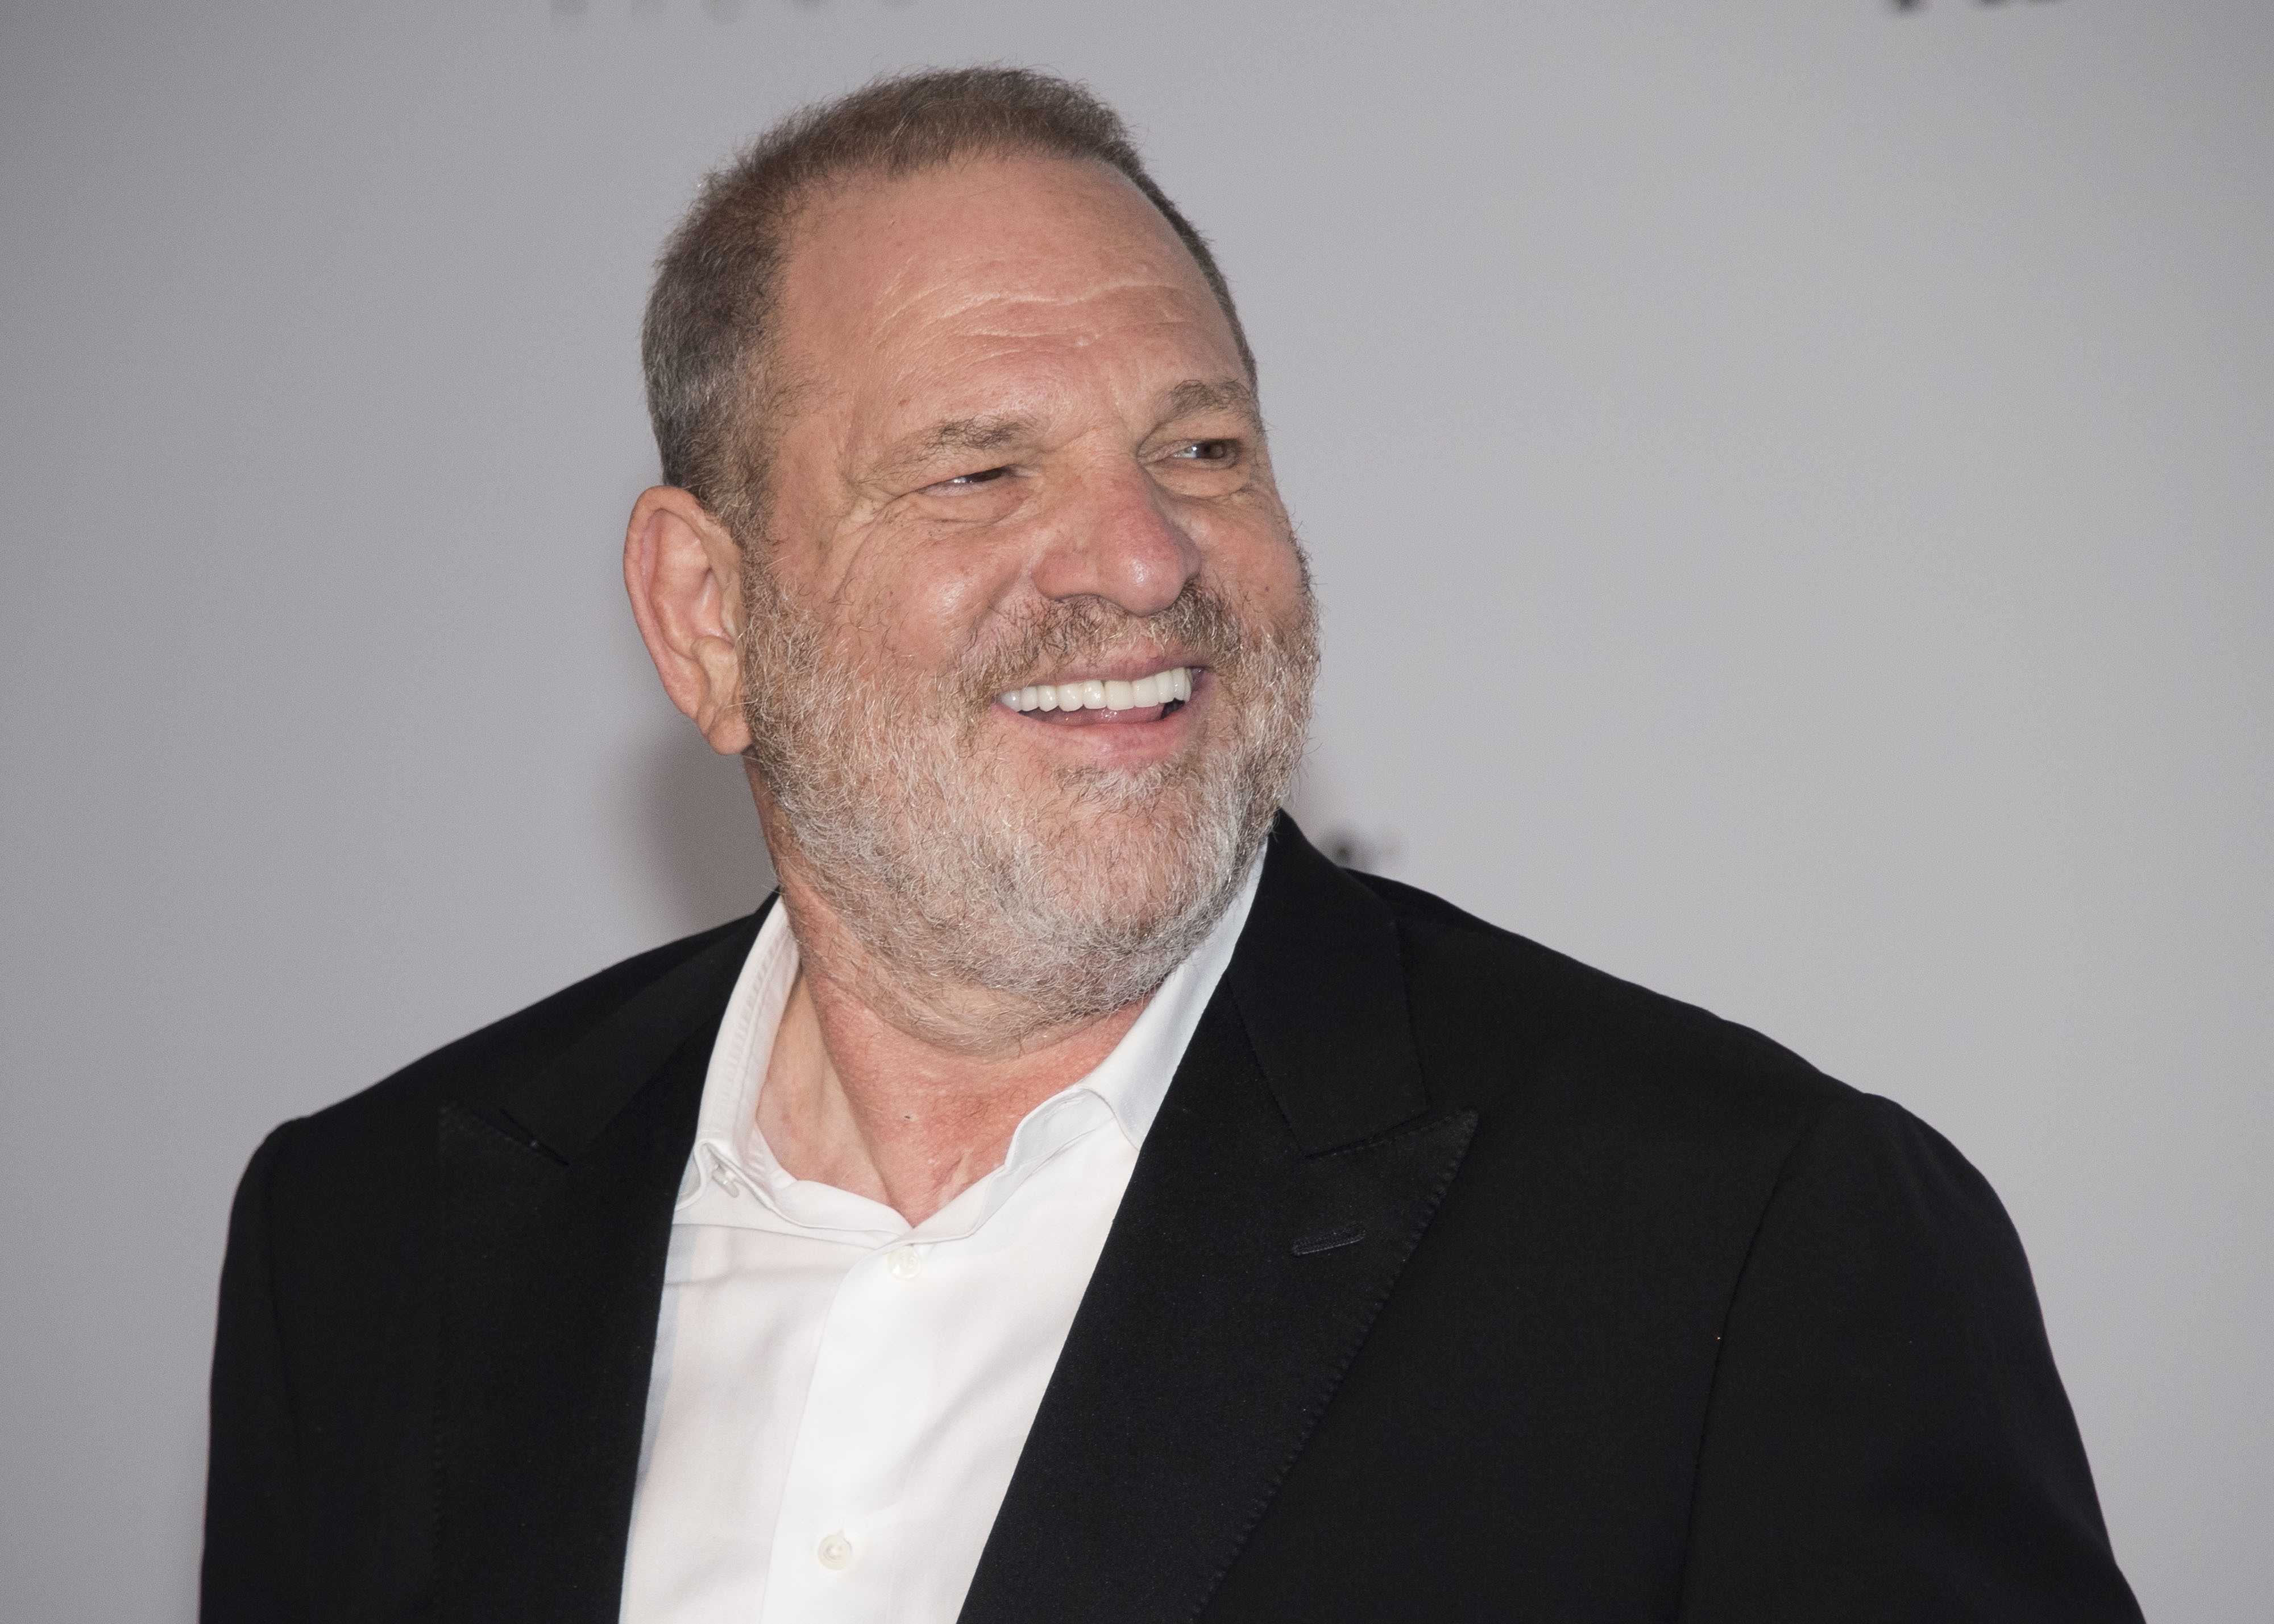 ‘Everybody’ knew about Harvey Weinstein’s behavior, says Hollywood screenwriter